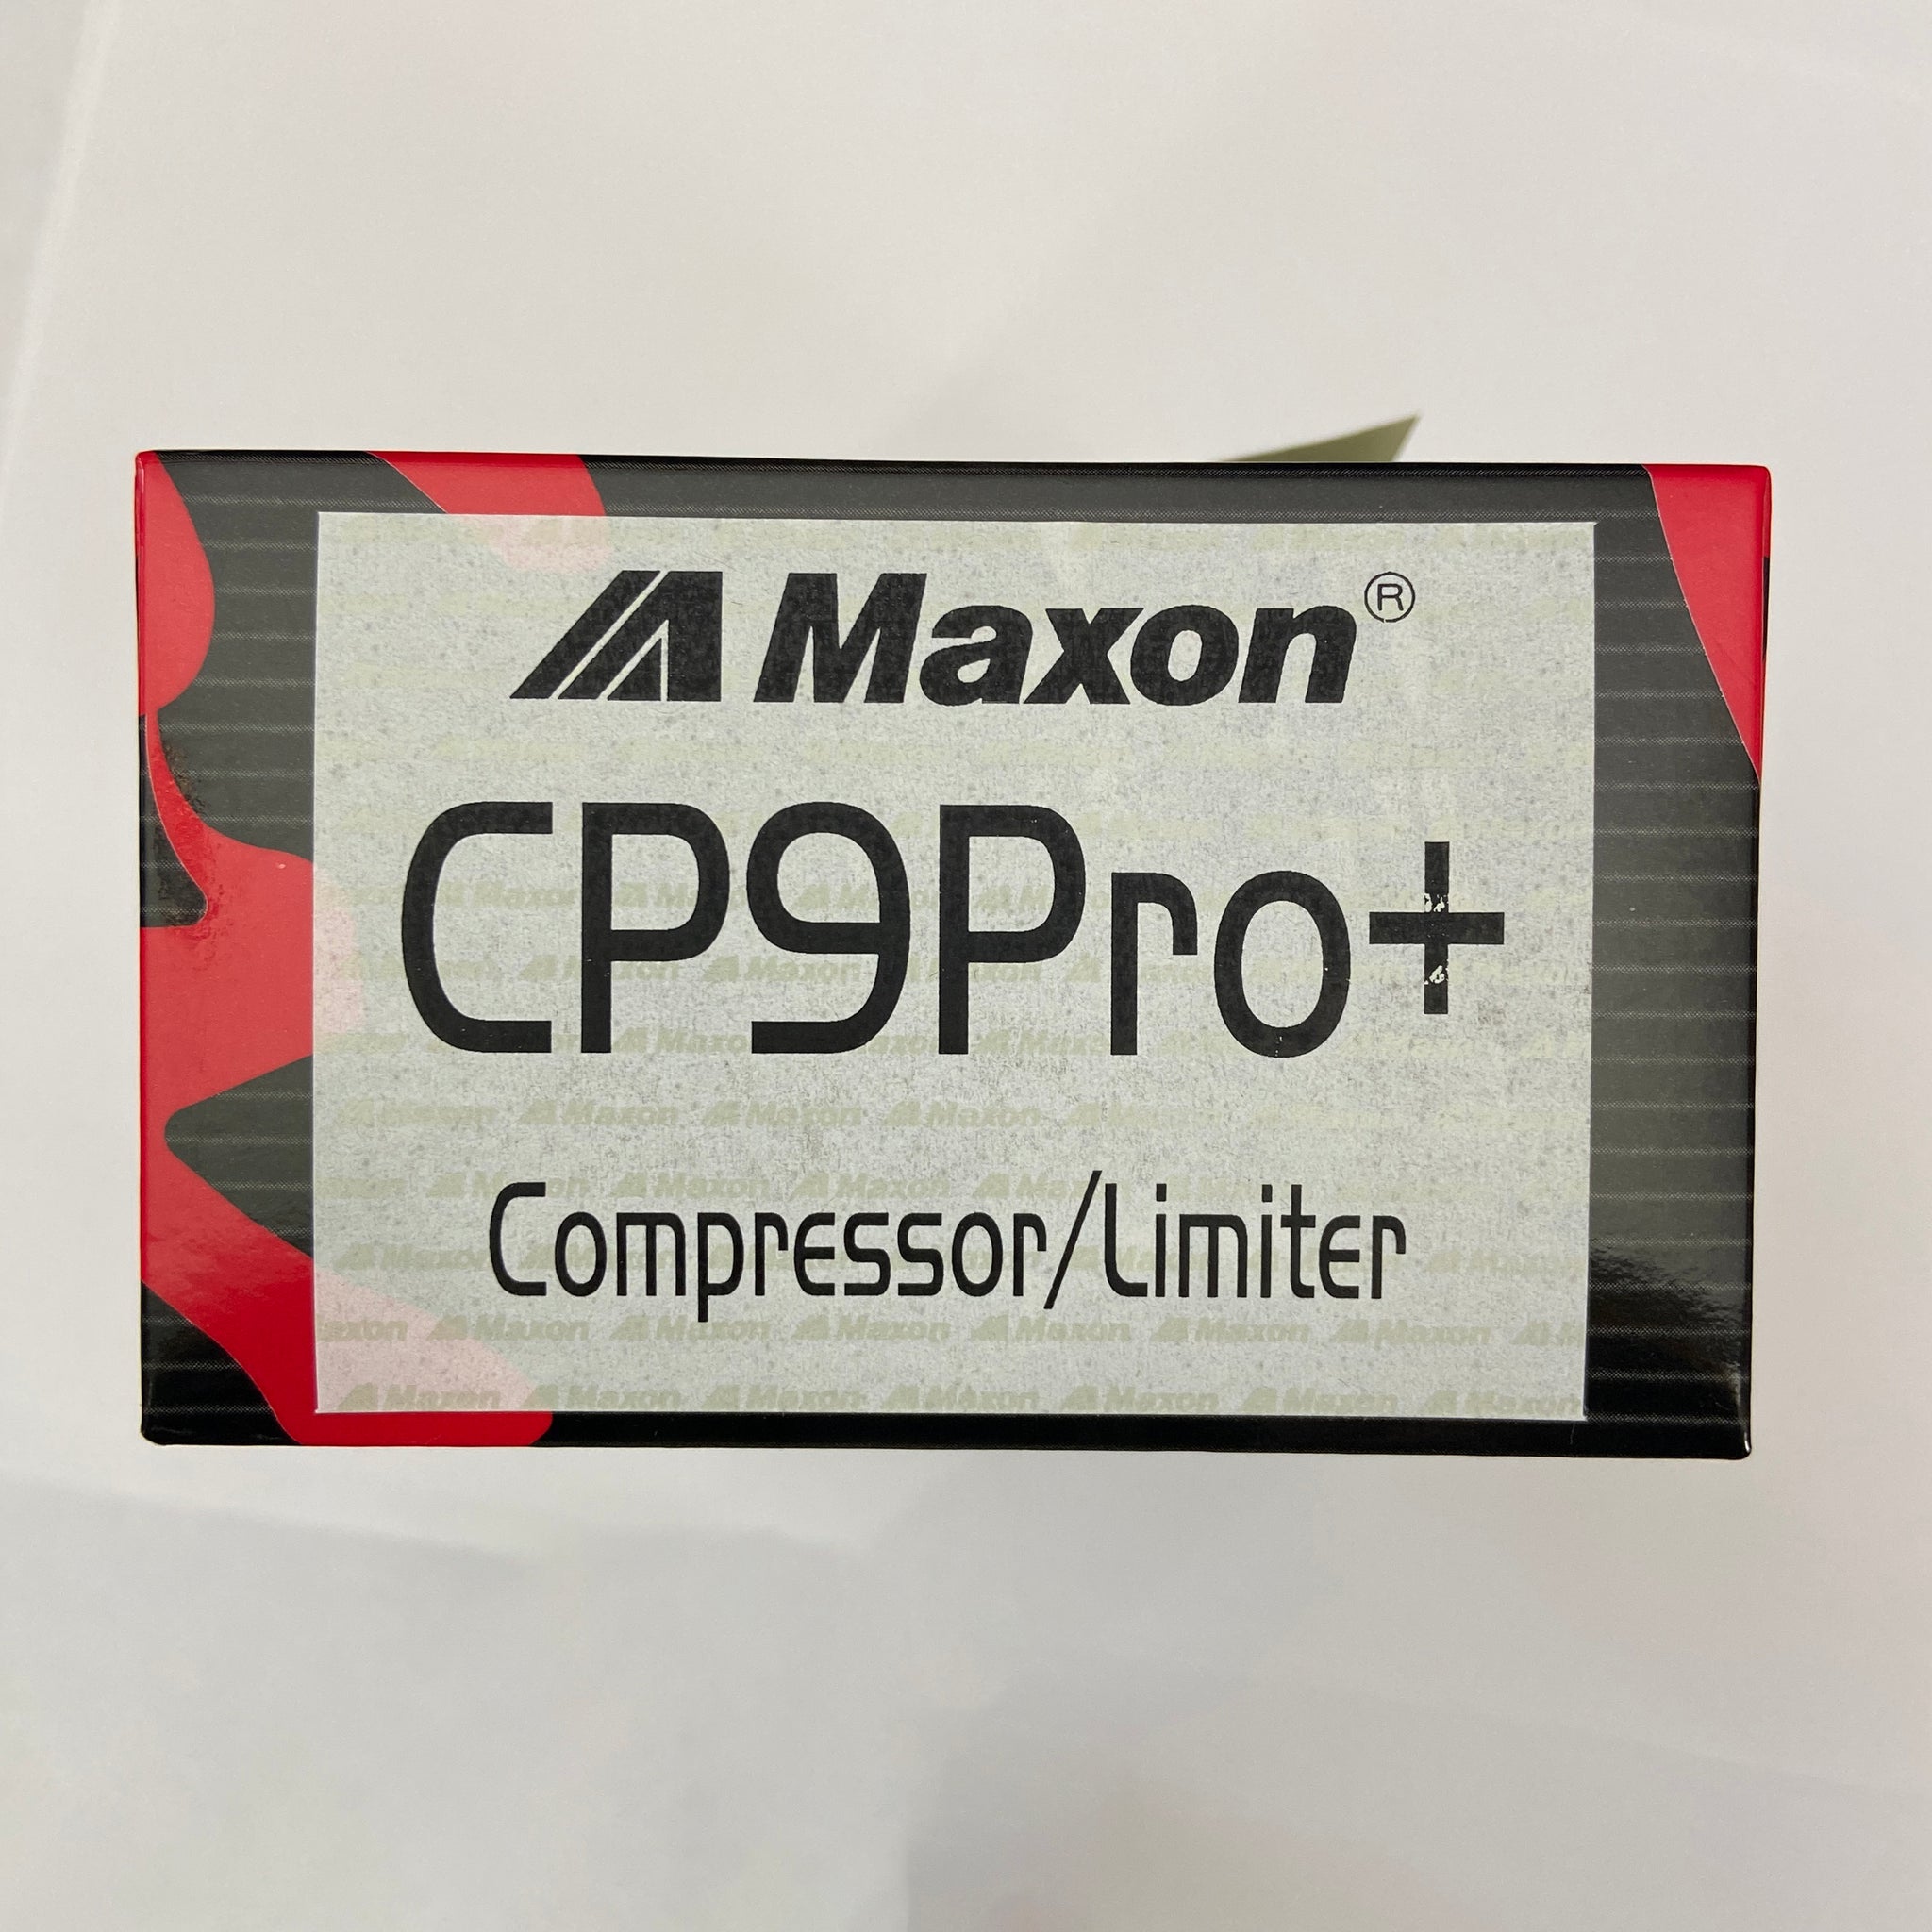 MAXON CP-9Pro+ Compressor/Limiter *serial number 1* (B-STOCK